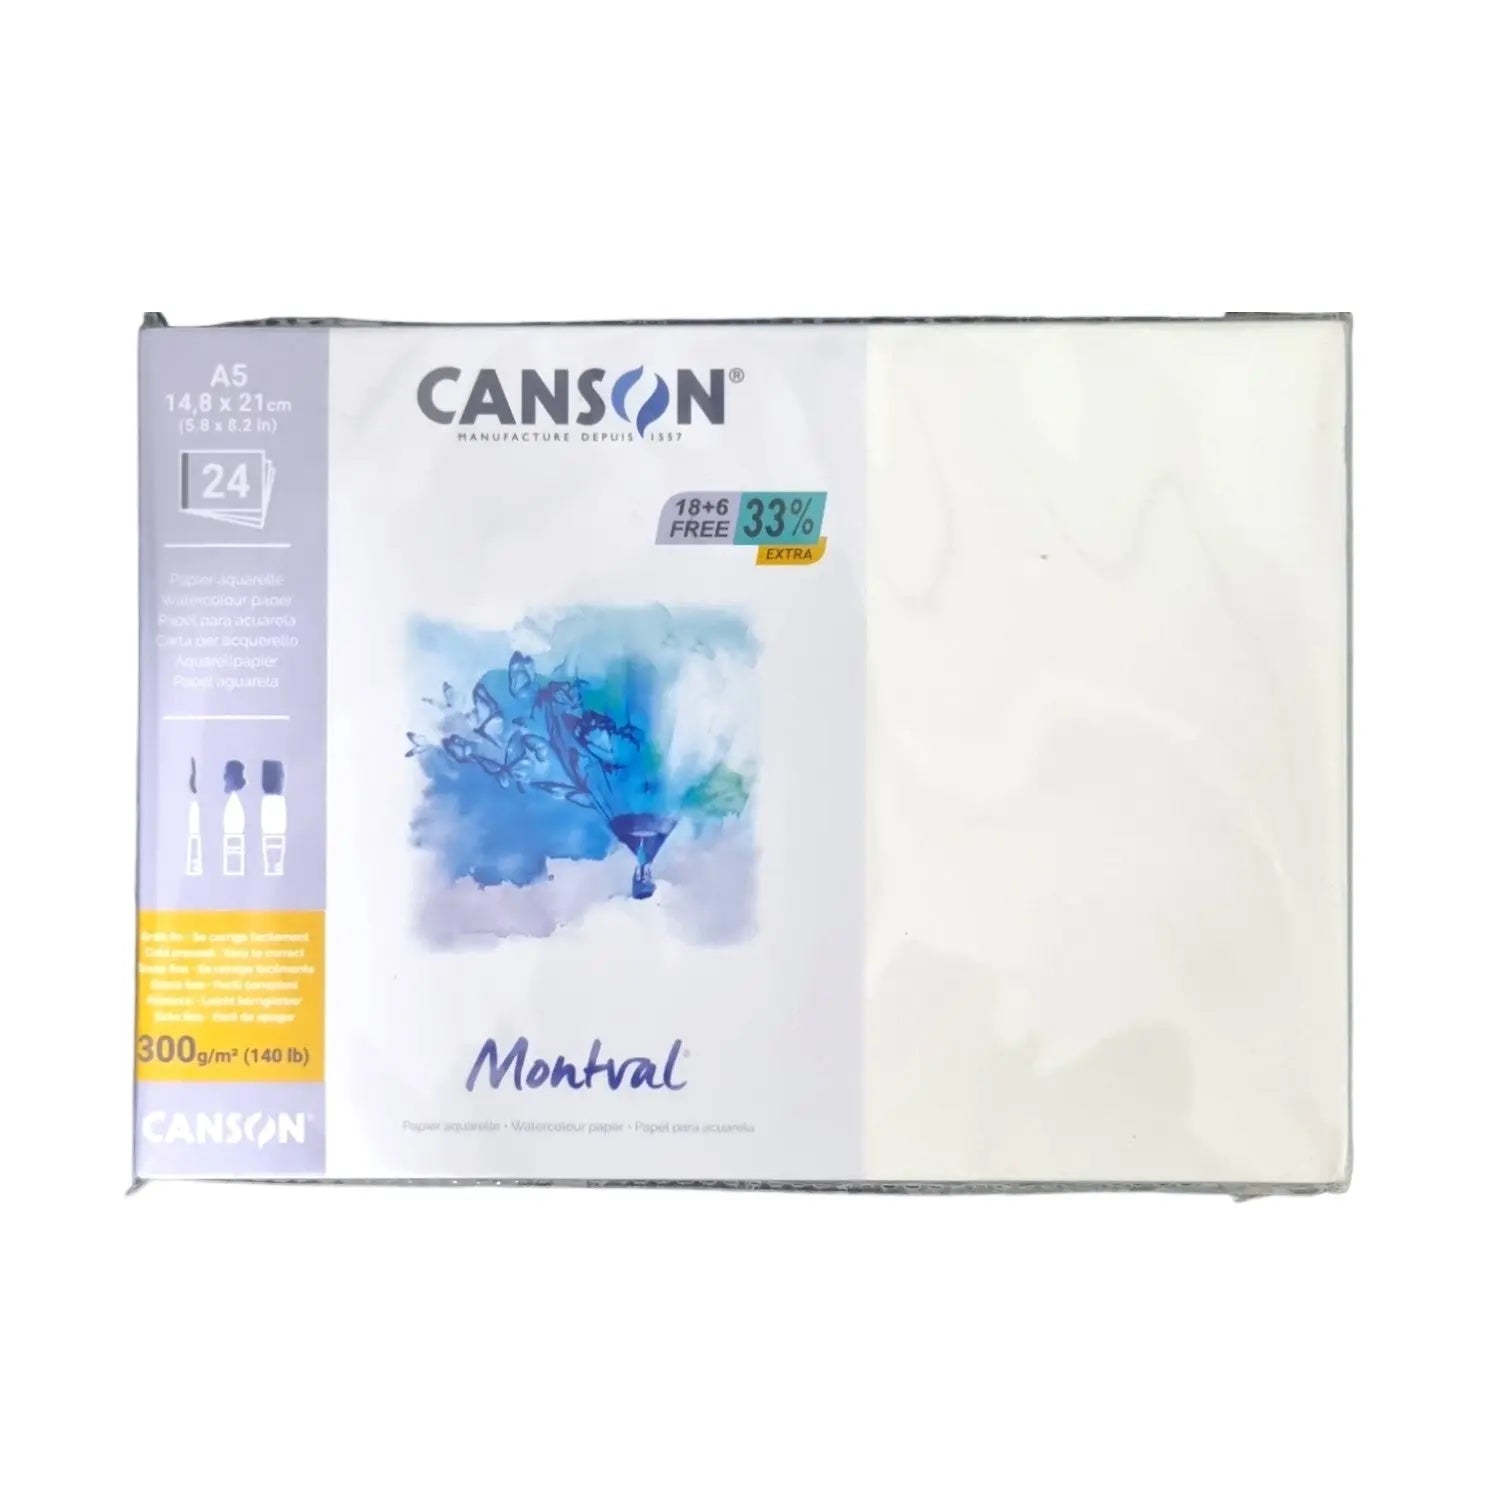 Canson Artist Series: Montval Watercolor Block 140lb. 4 x 6